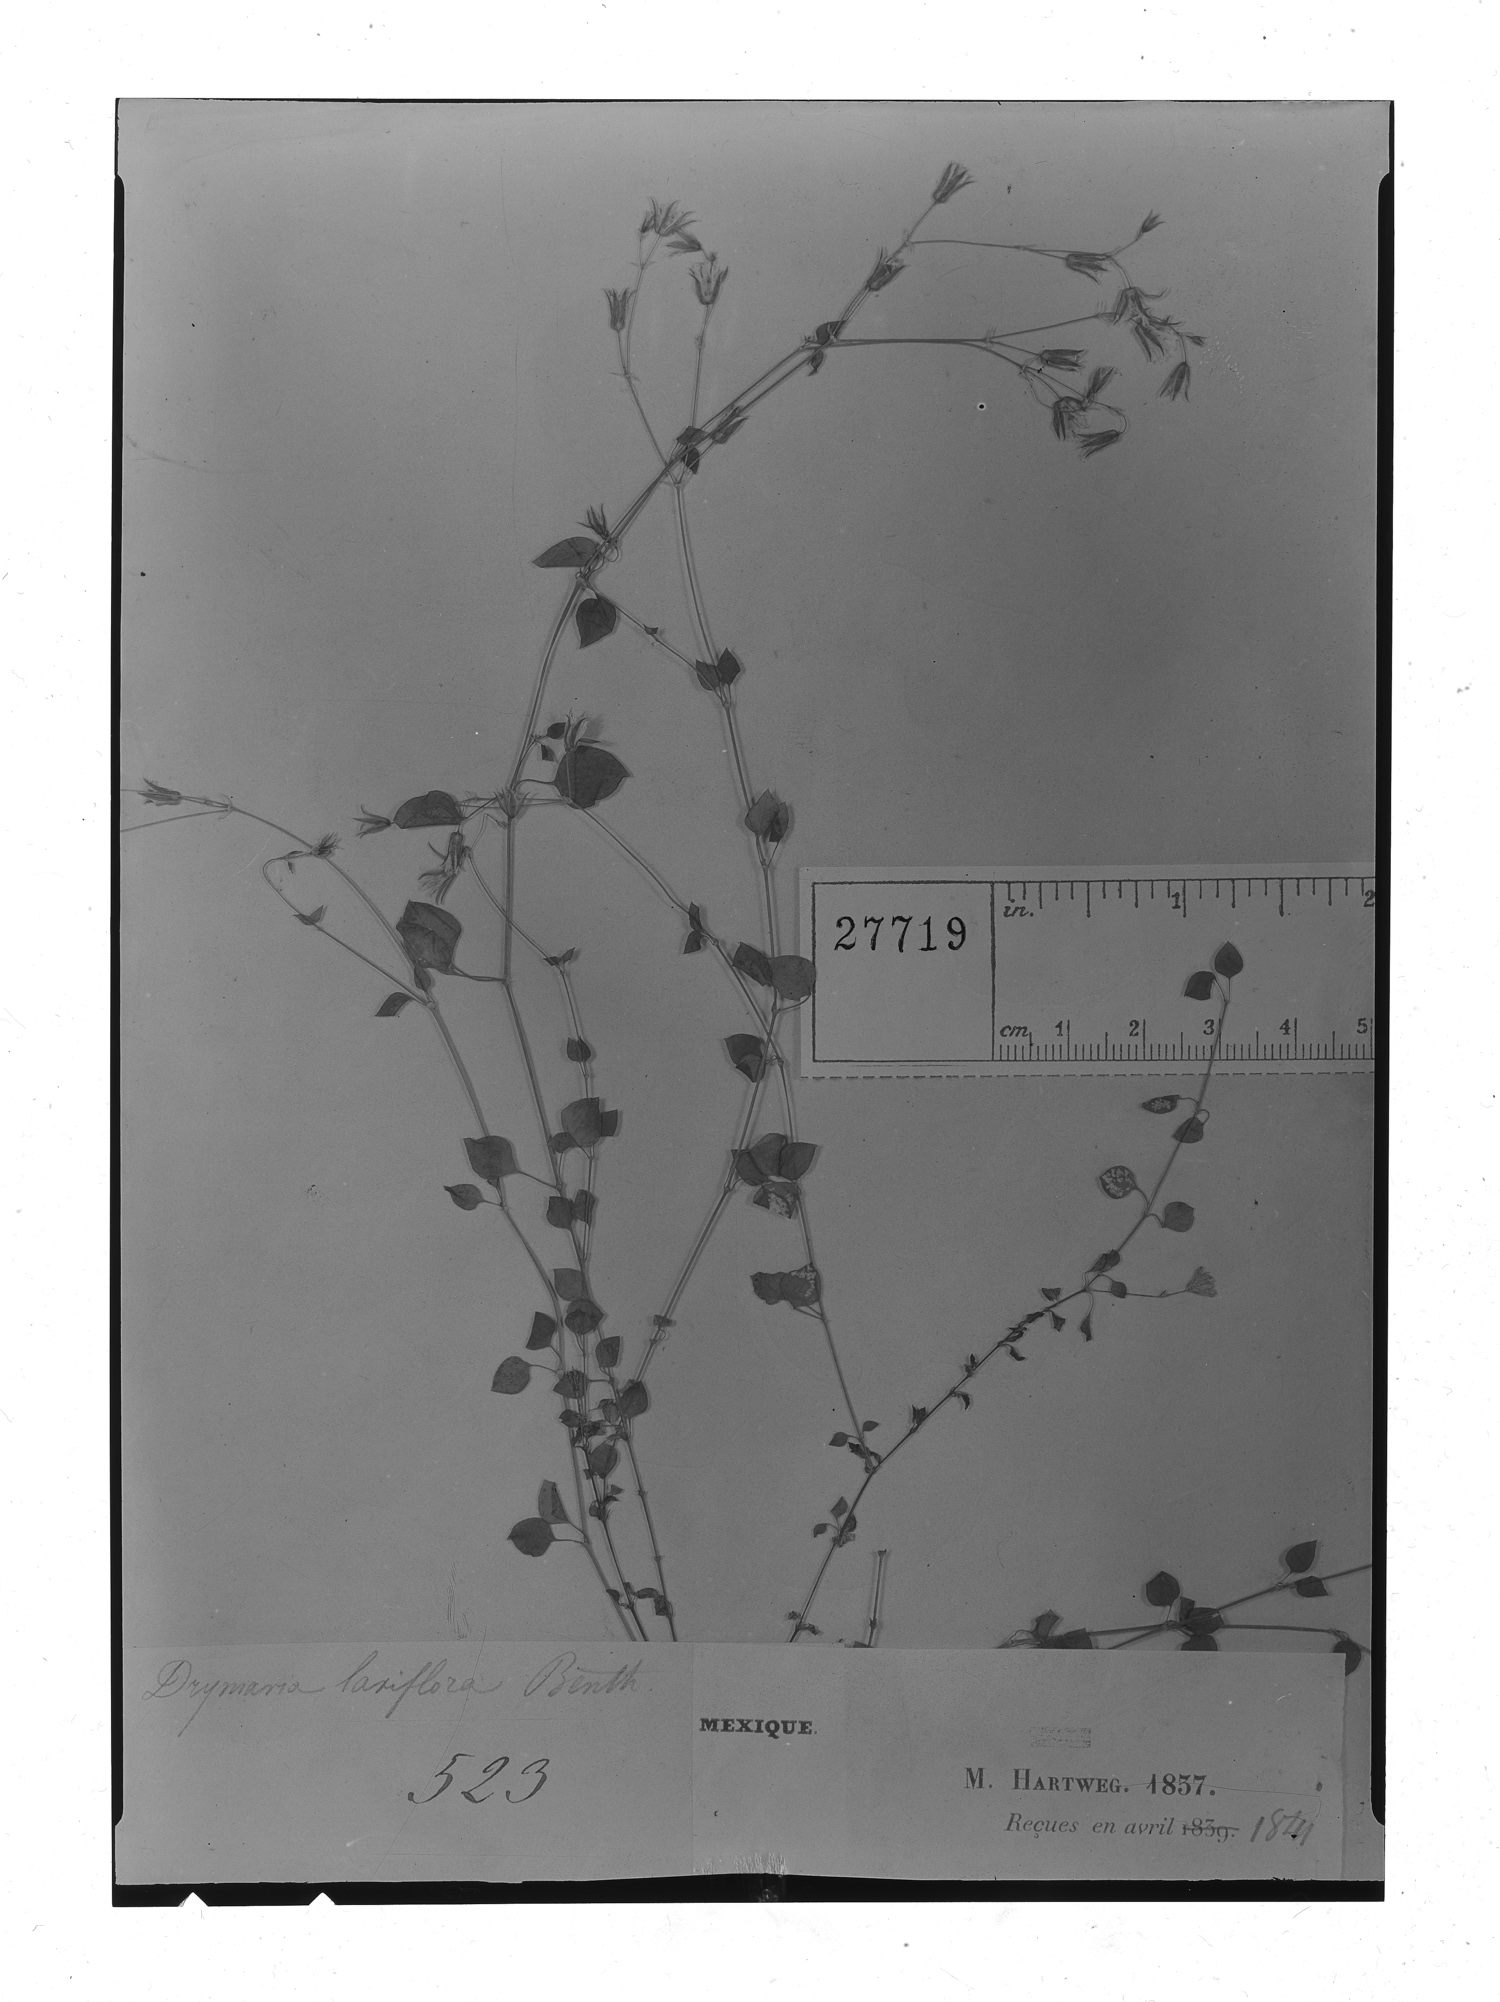 Drymaria laxiflora image